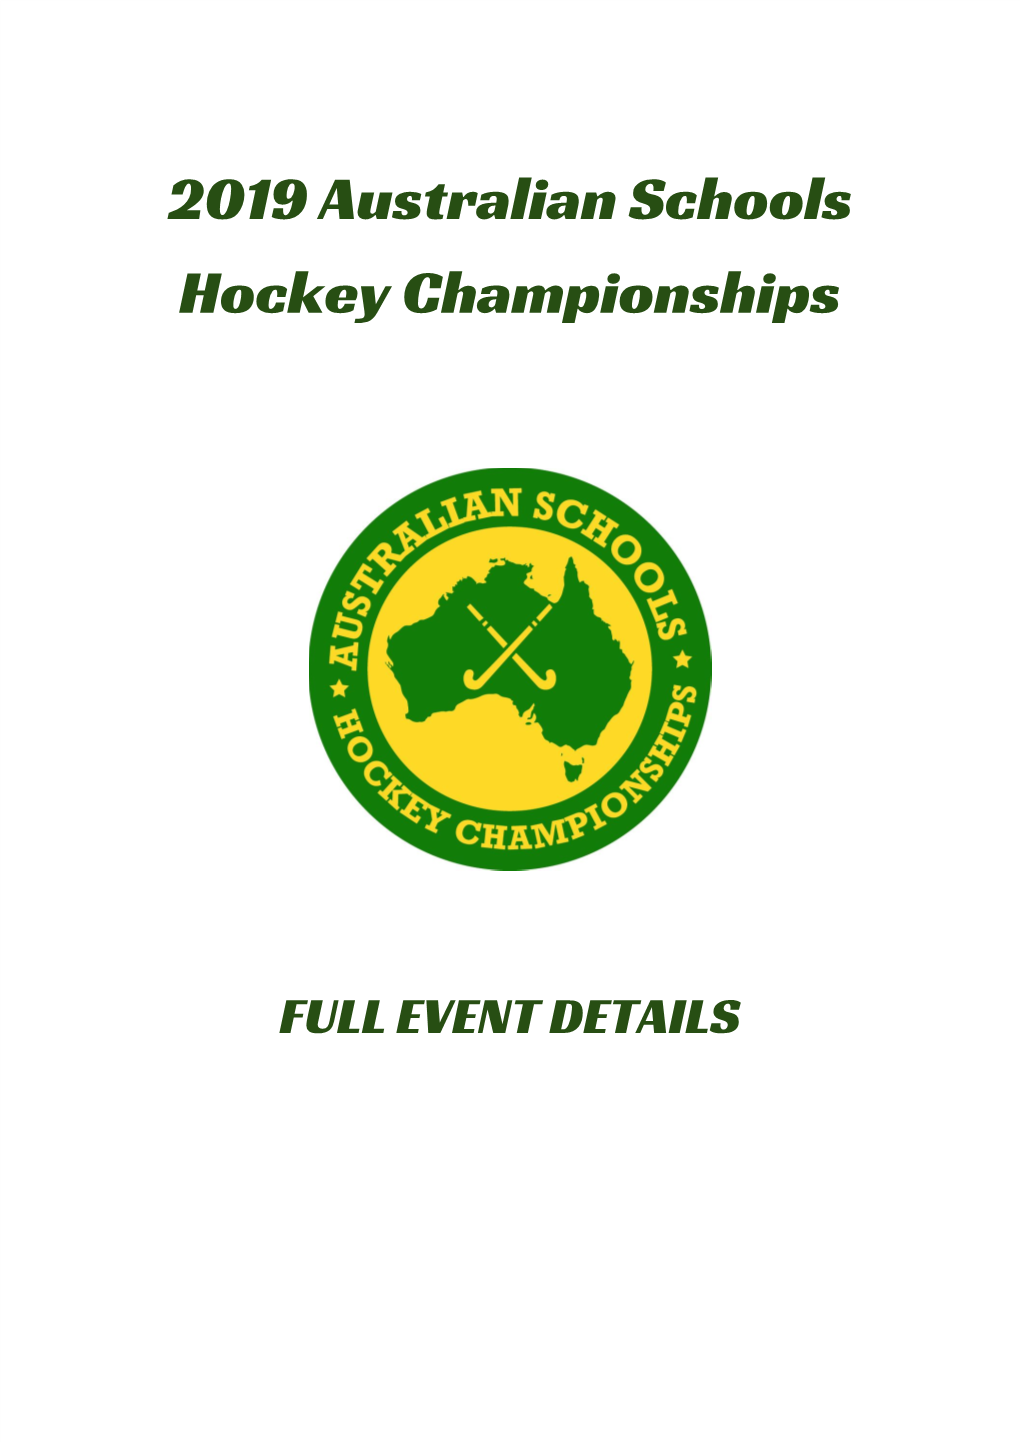 2019 Australian Schools Hockey Championships